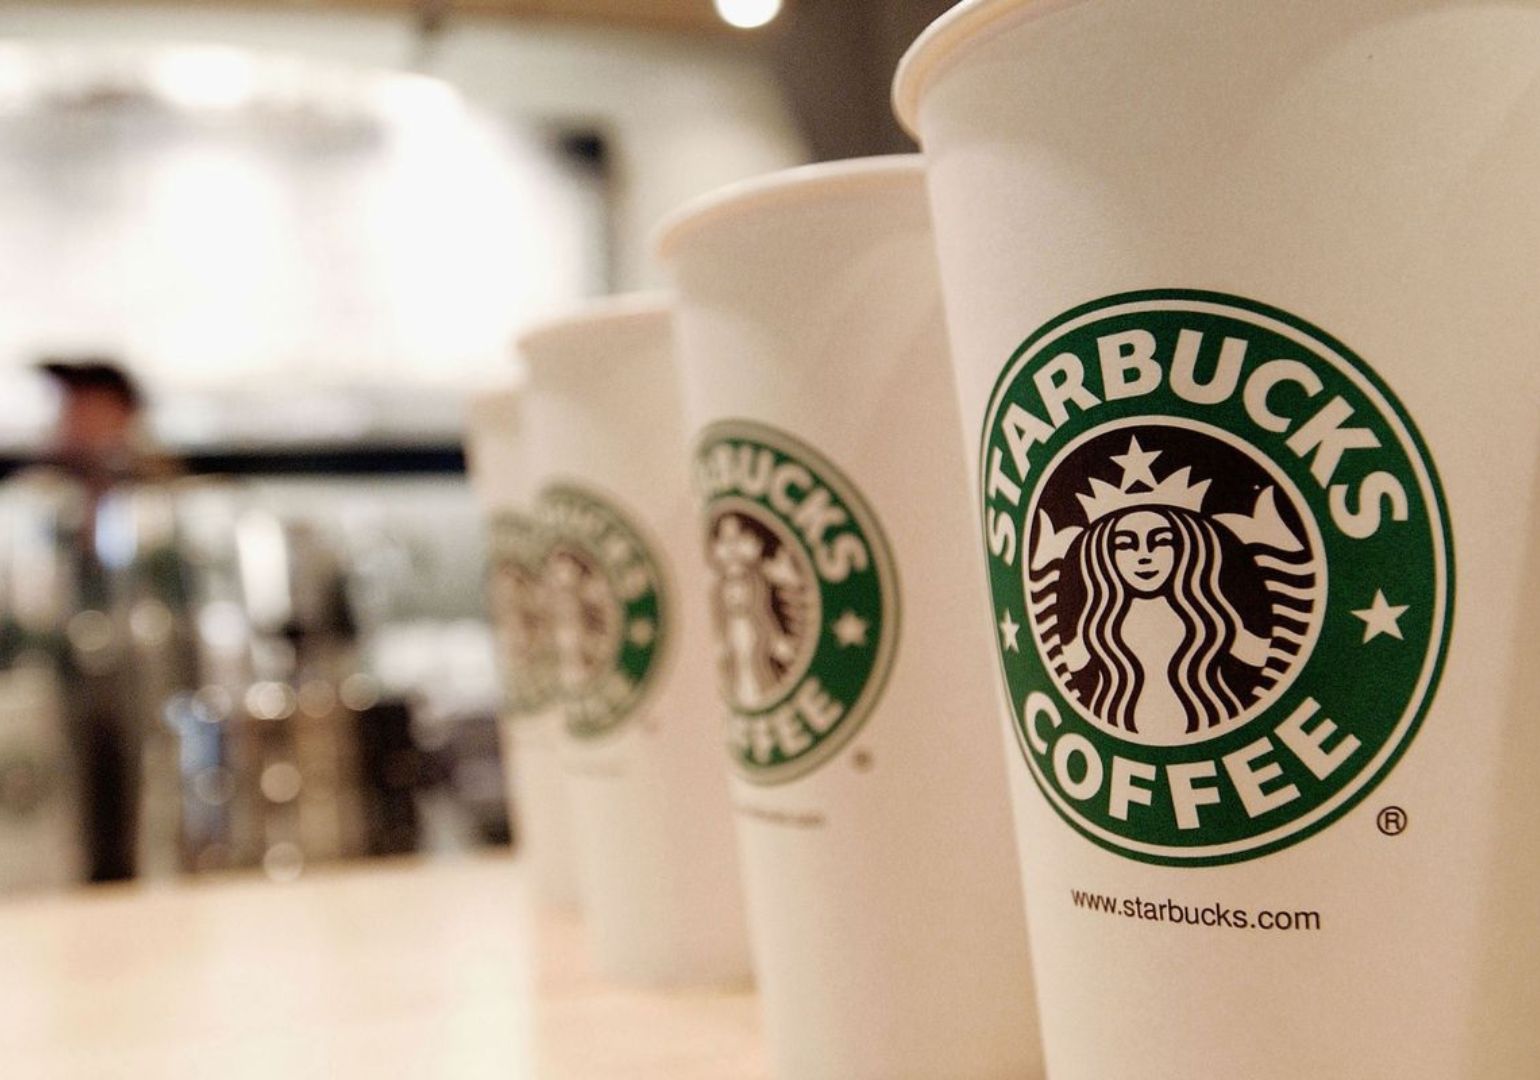 Starbucks-ის კვარტალურმა გაყიდვებმა რეკორდულ ნიშნულს მიაღწია